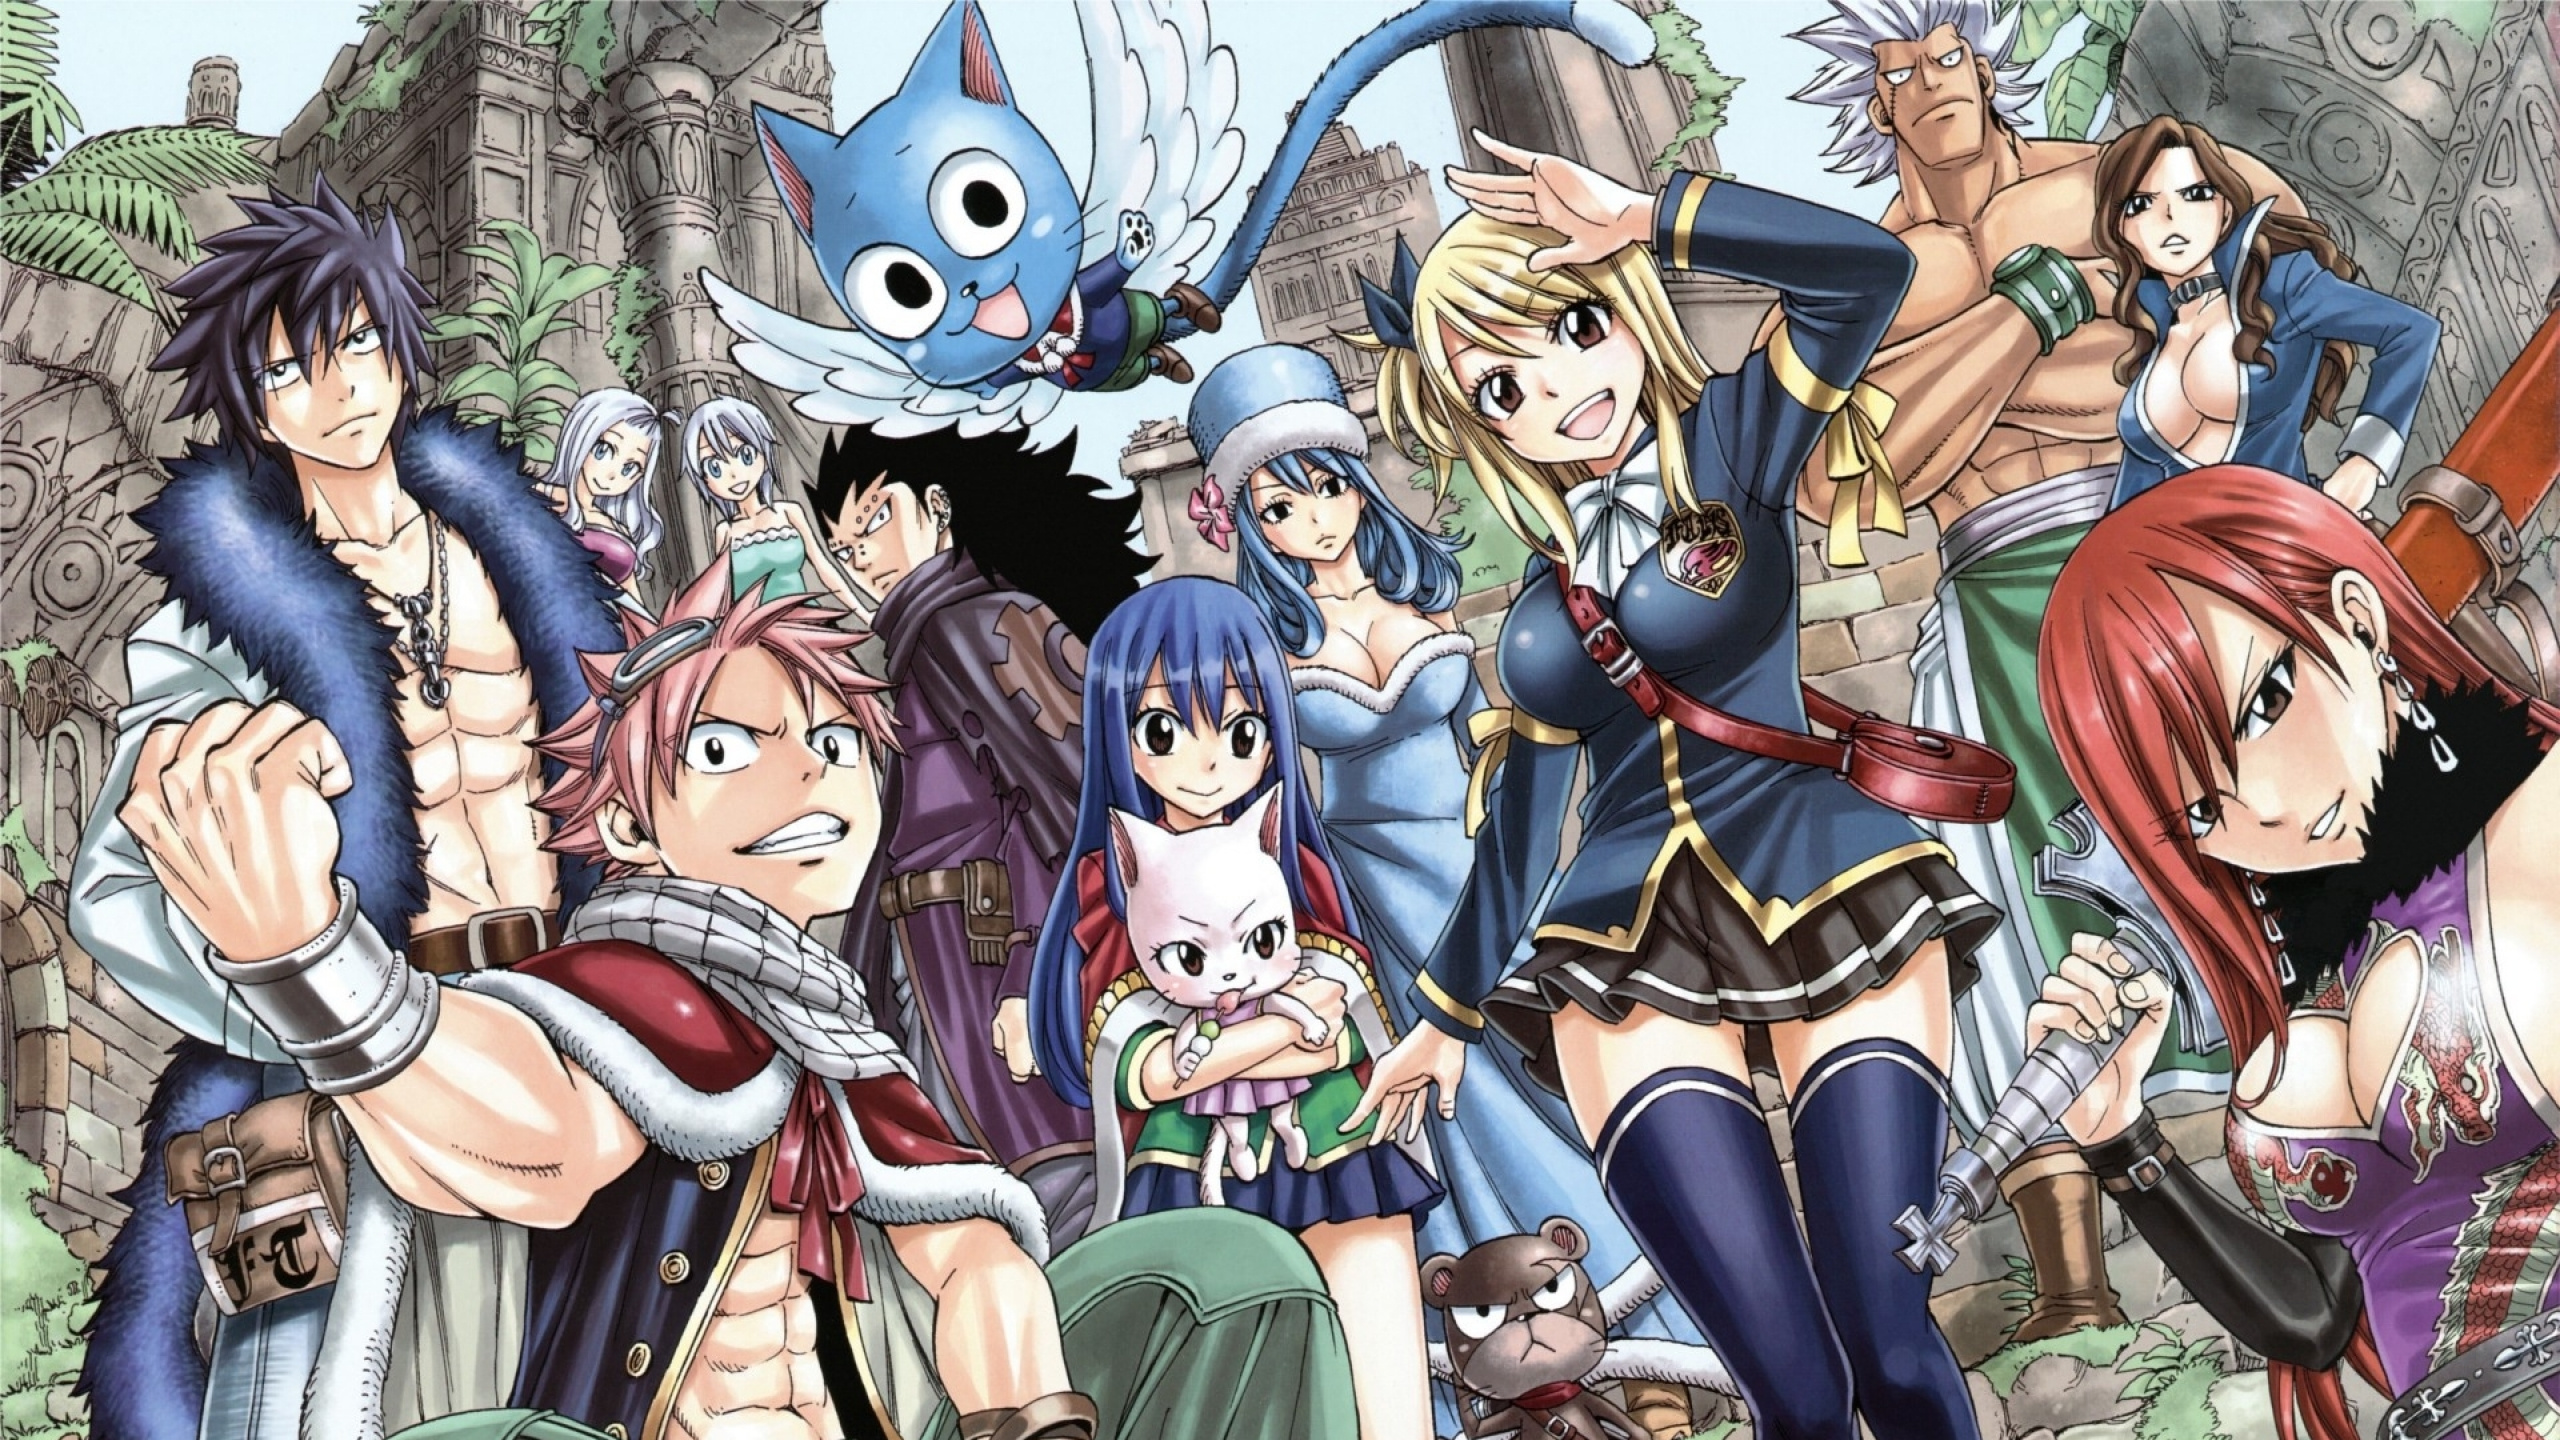 Blauhaarige Anime-Charakterillustration. Wallpaper in 2560x1440 Resolution